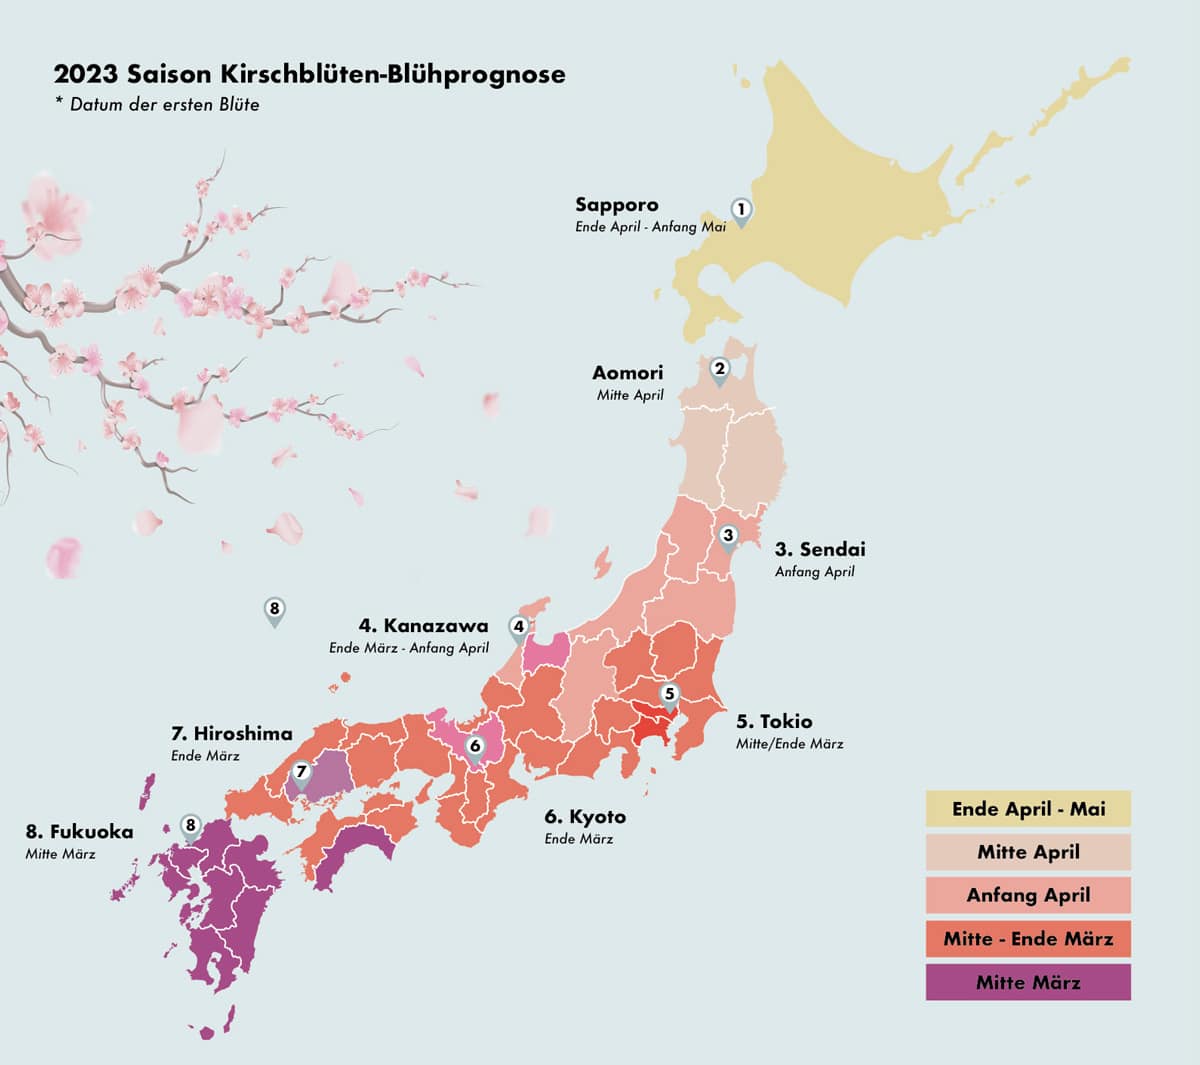 Japanische Kirschblüte 2023, Karte der Meteorologen für Japan